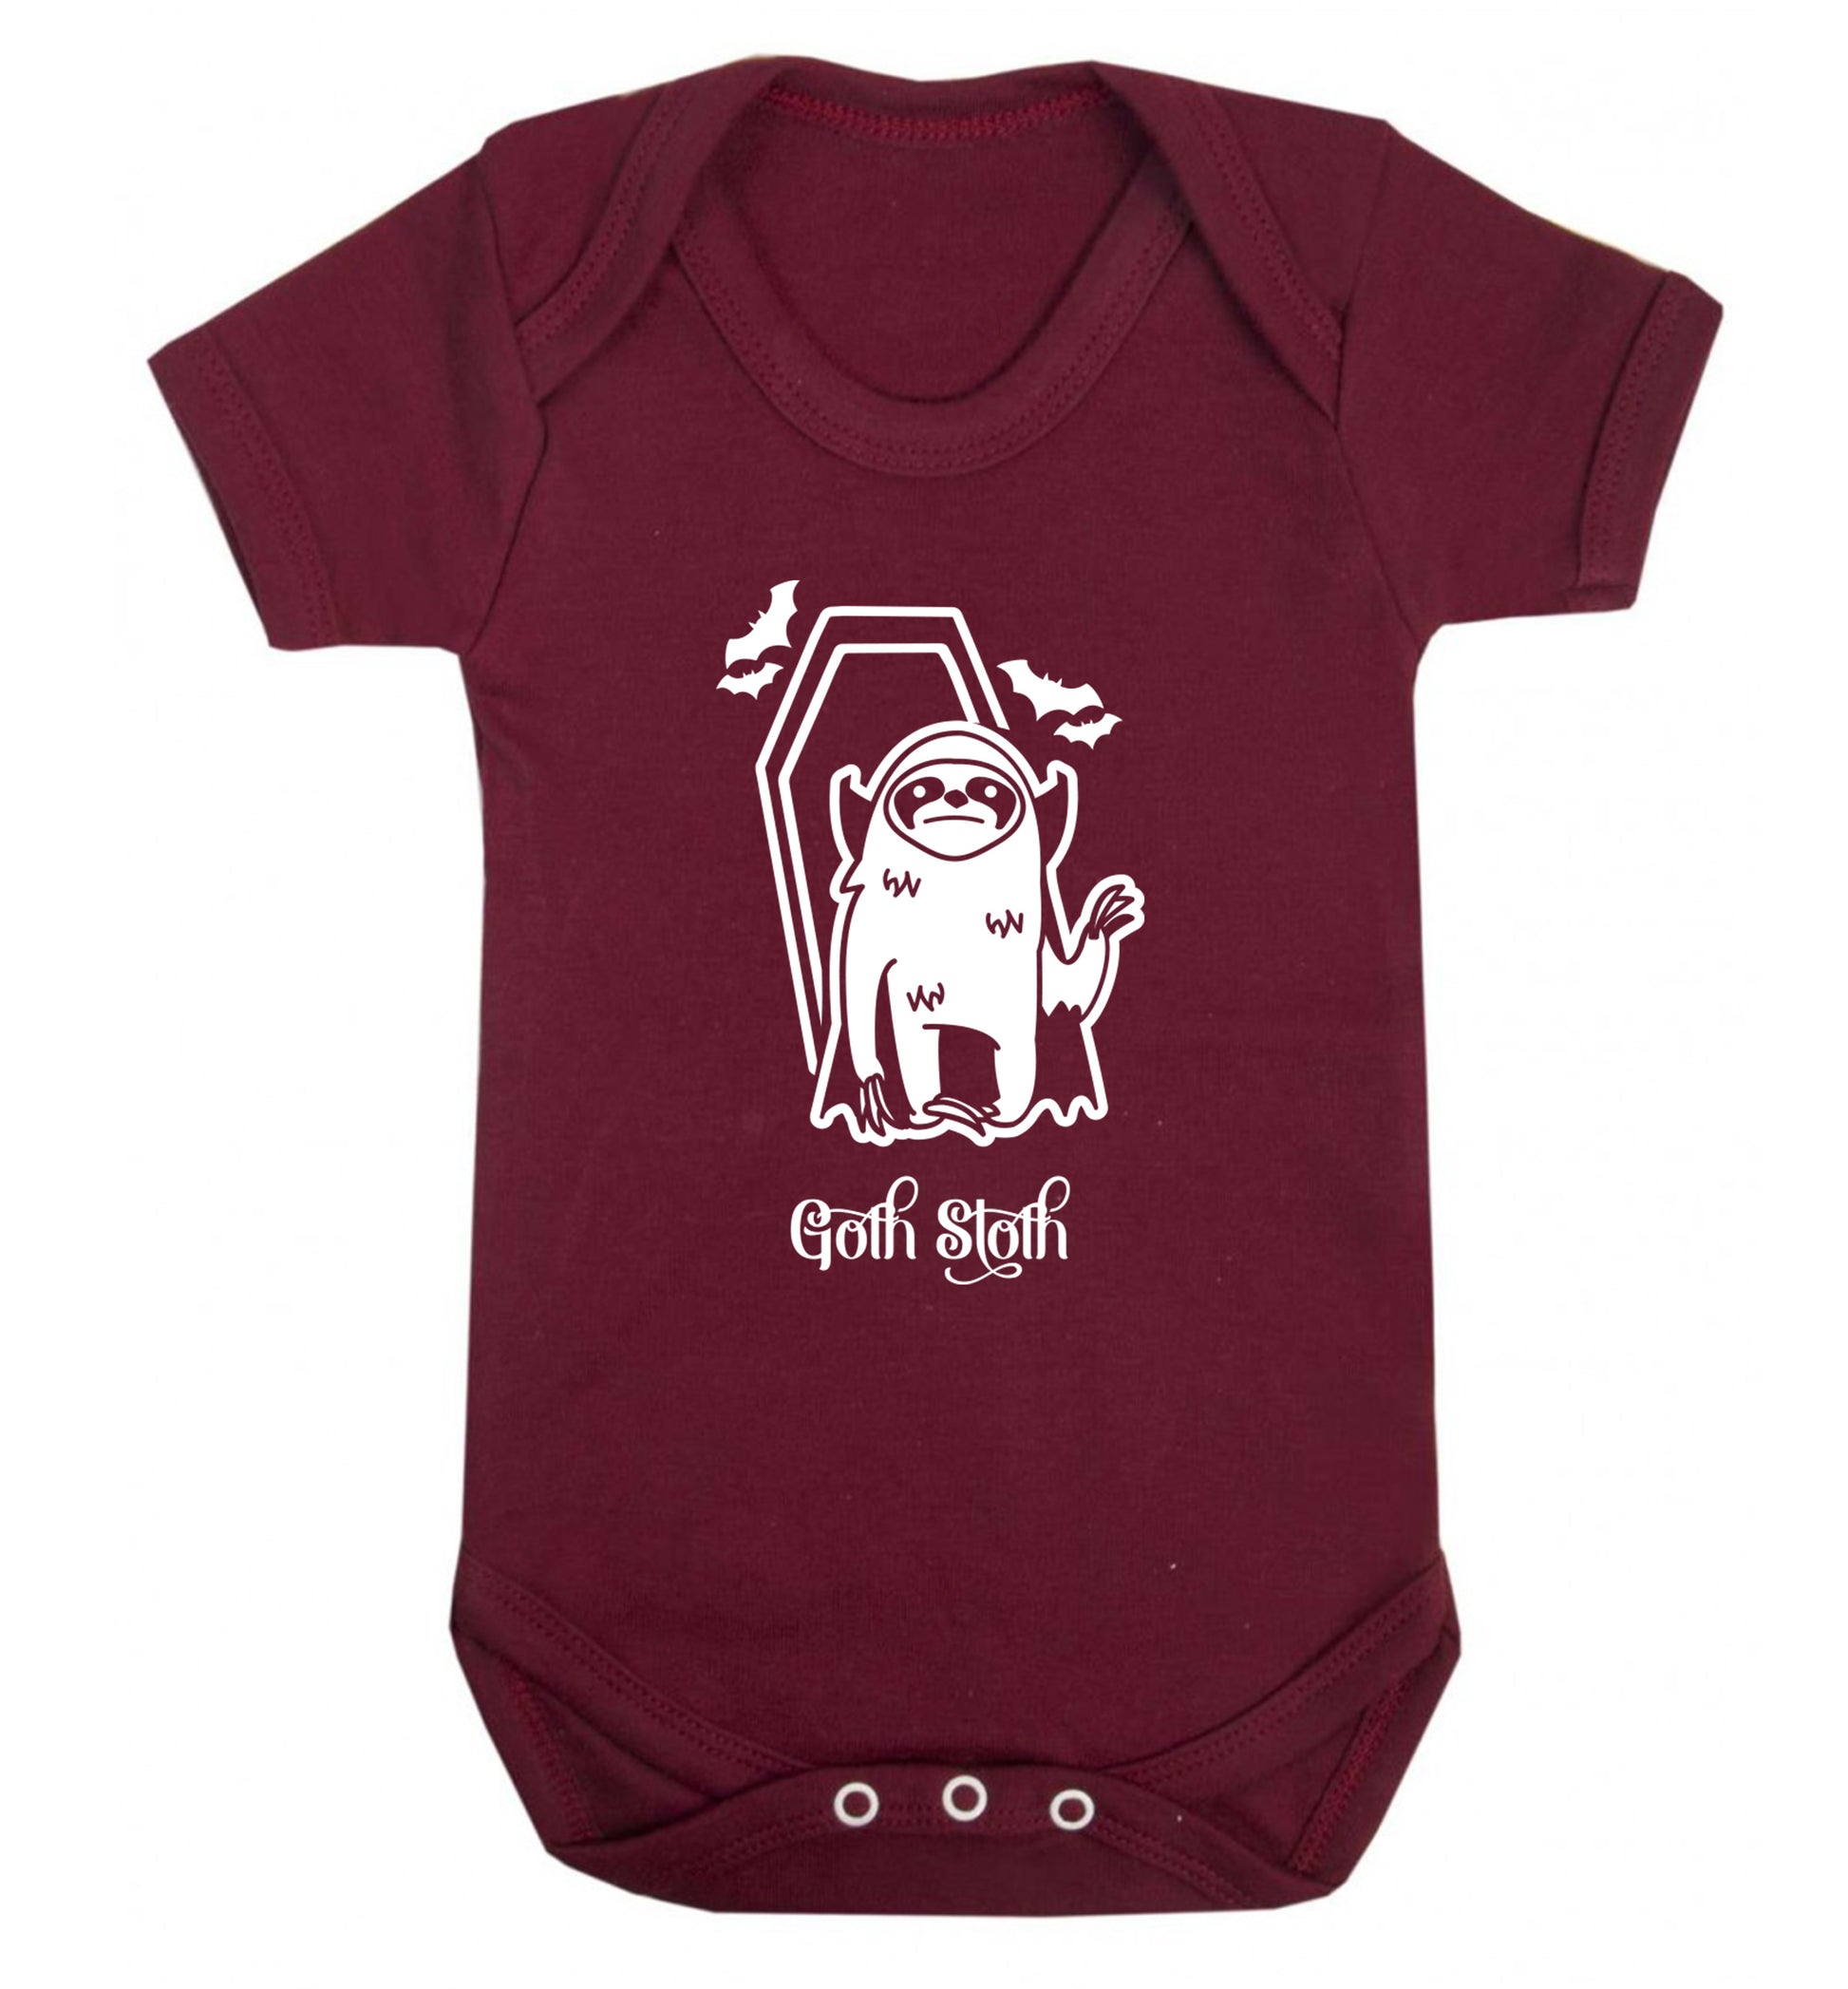 Goth Sloth Baby Vest maroon 18-24 months